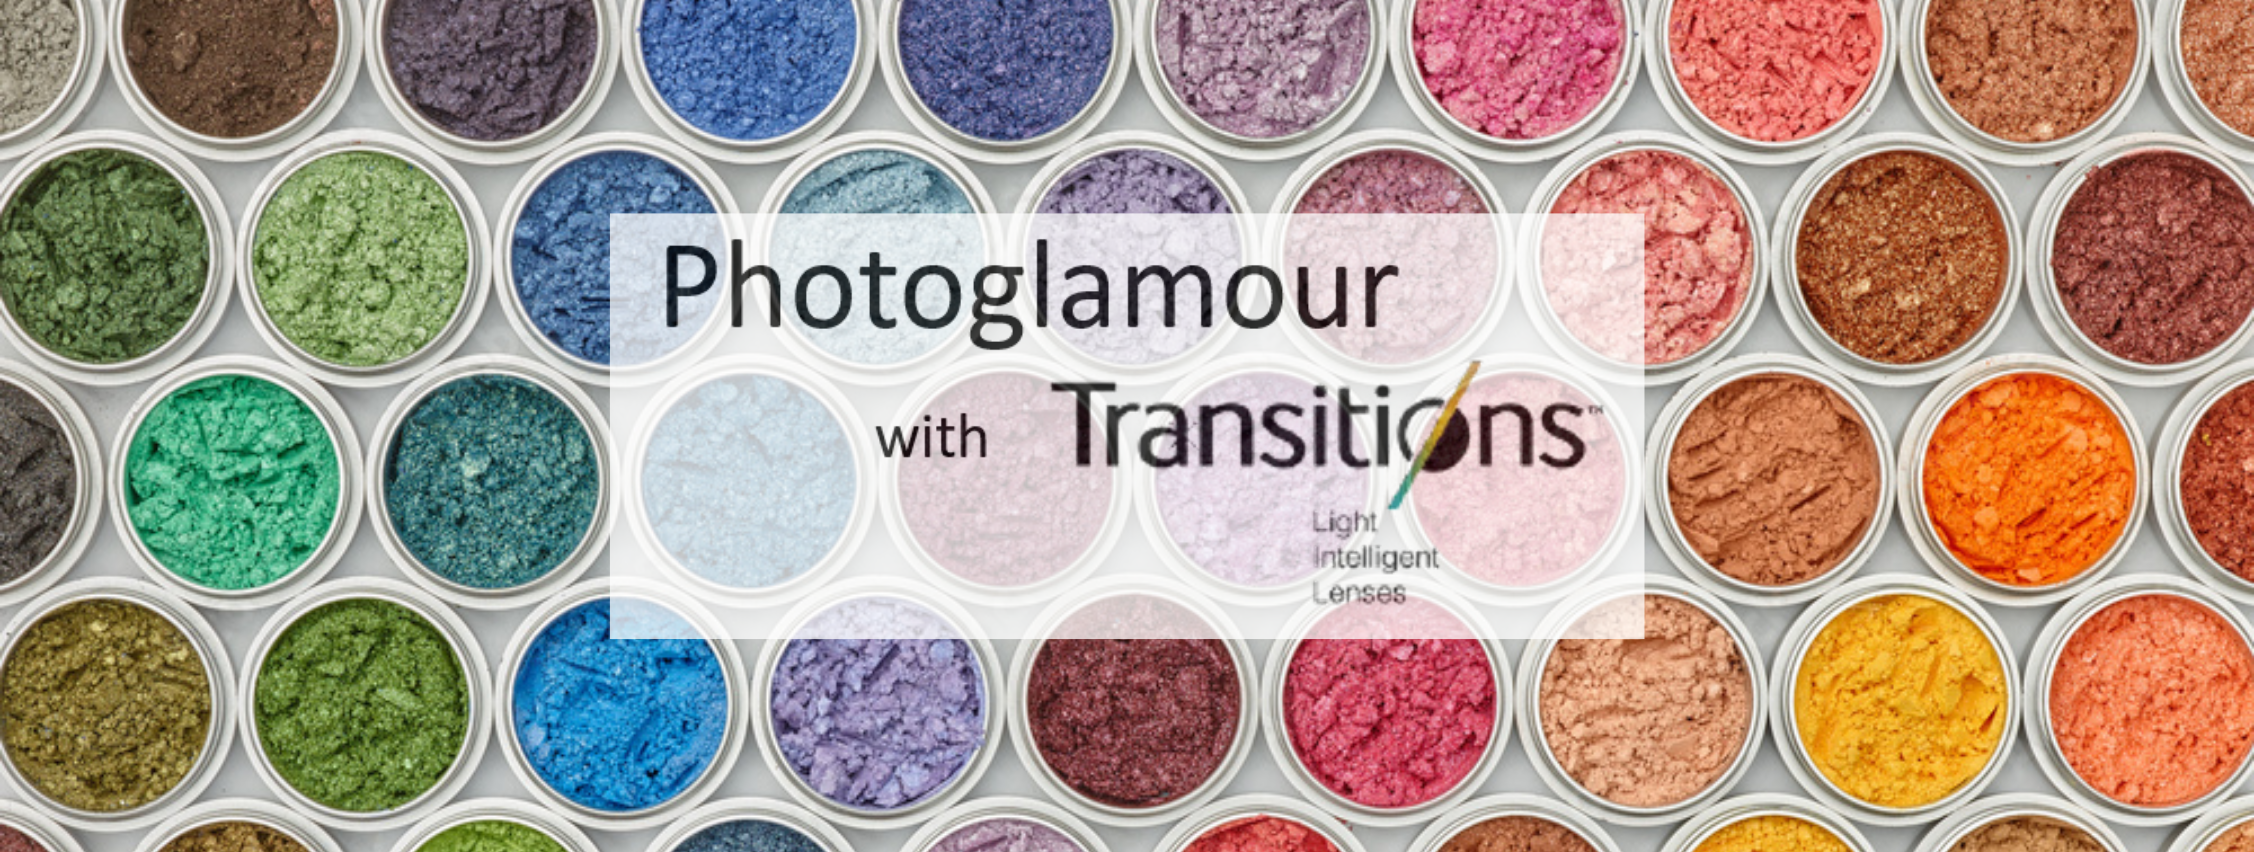 Landingspagina PhotoGlamour with transitions